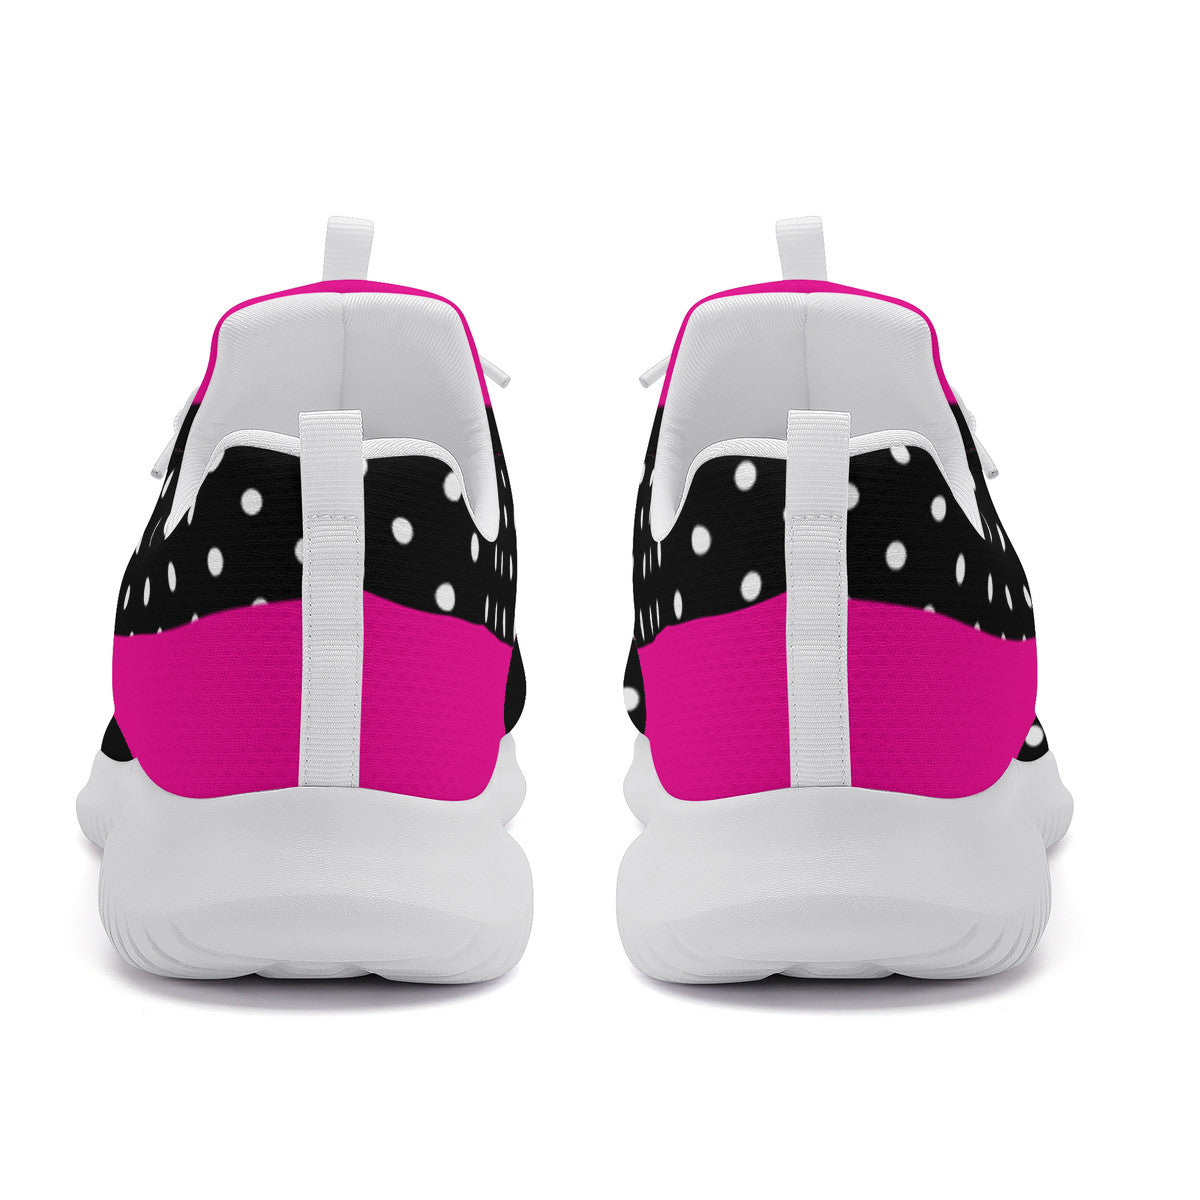 Fitness Sneakers - Polka Dot - Black & Pink